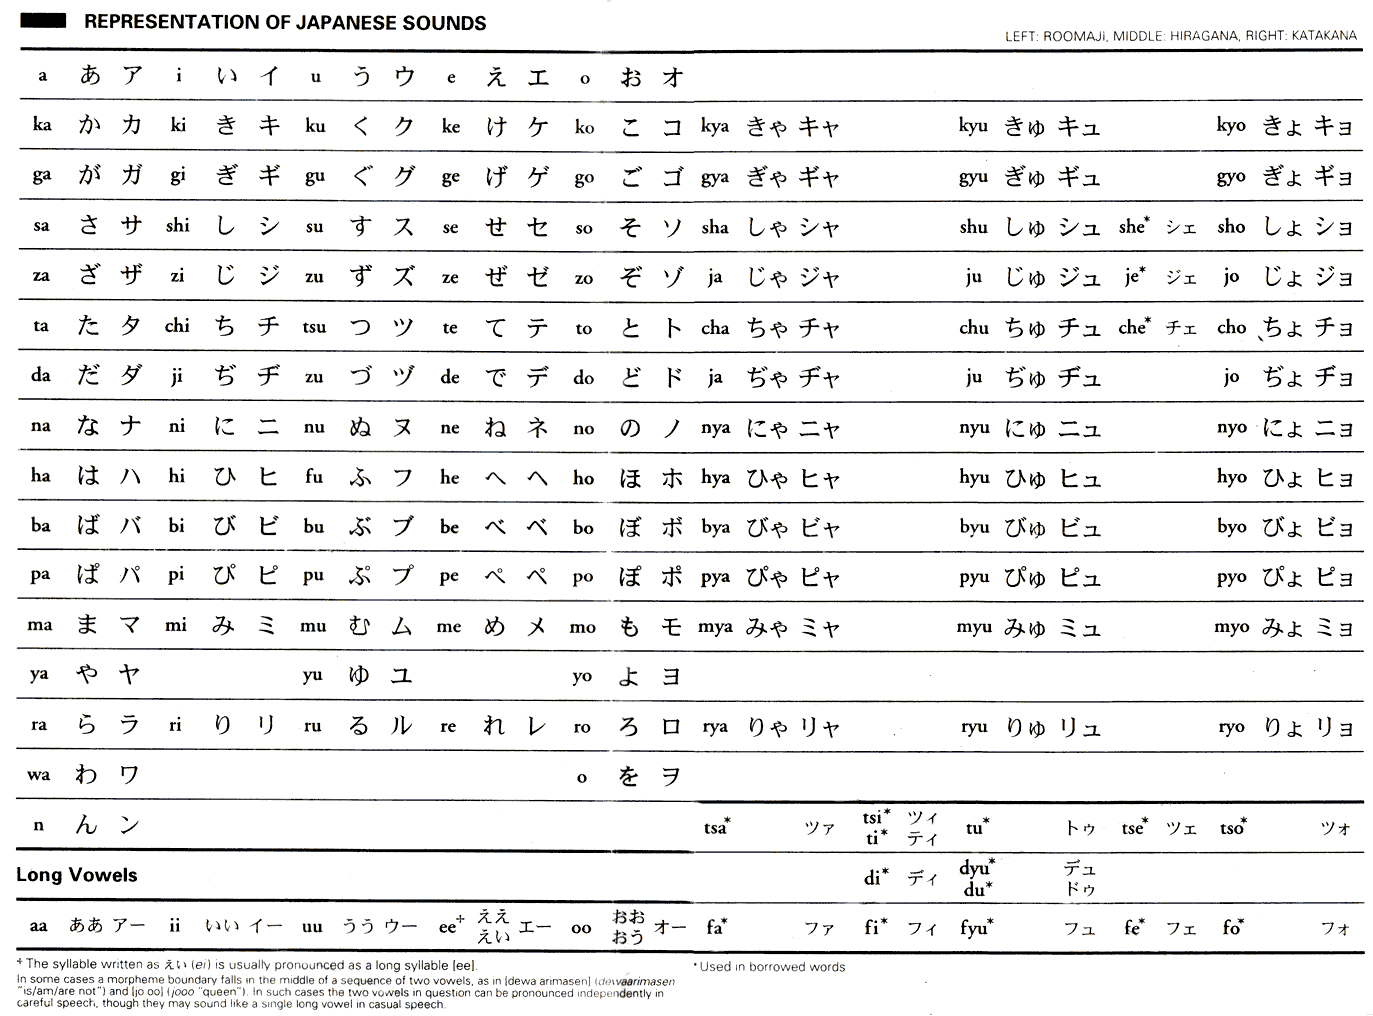 Roomaji, hiragana, katakana alphabet